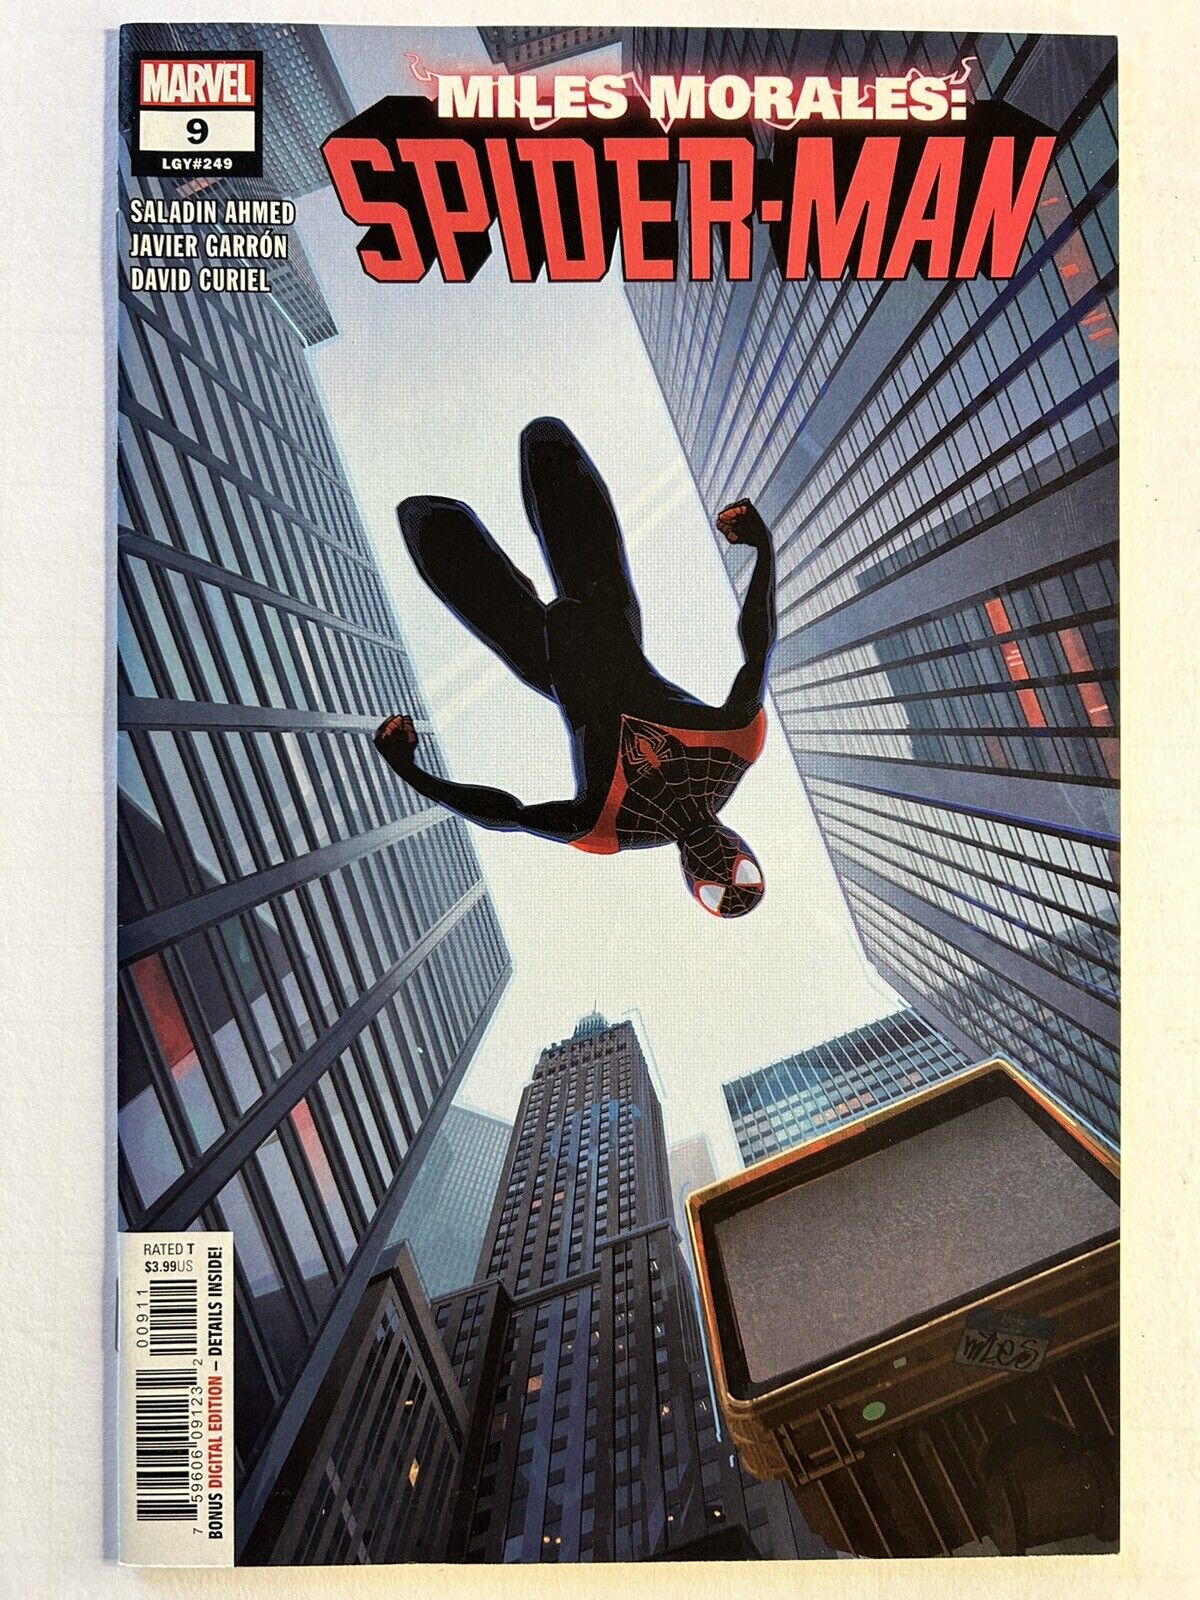 Miles Morales Spider-Man #9 | VF/NM | Assessor, Quantum | Prowler | Marvel